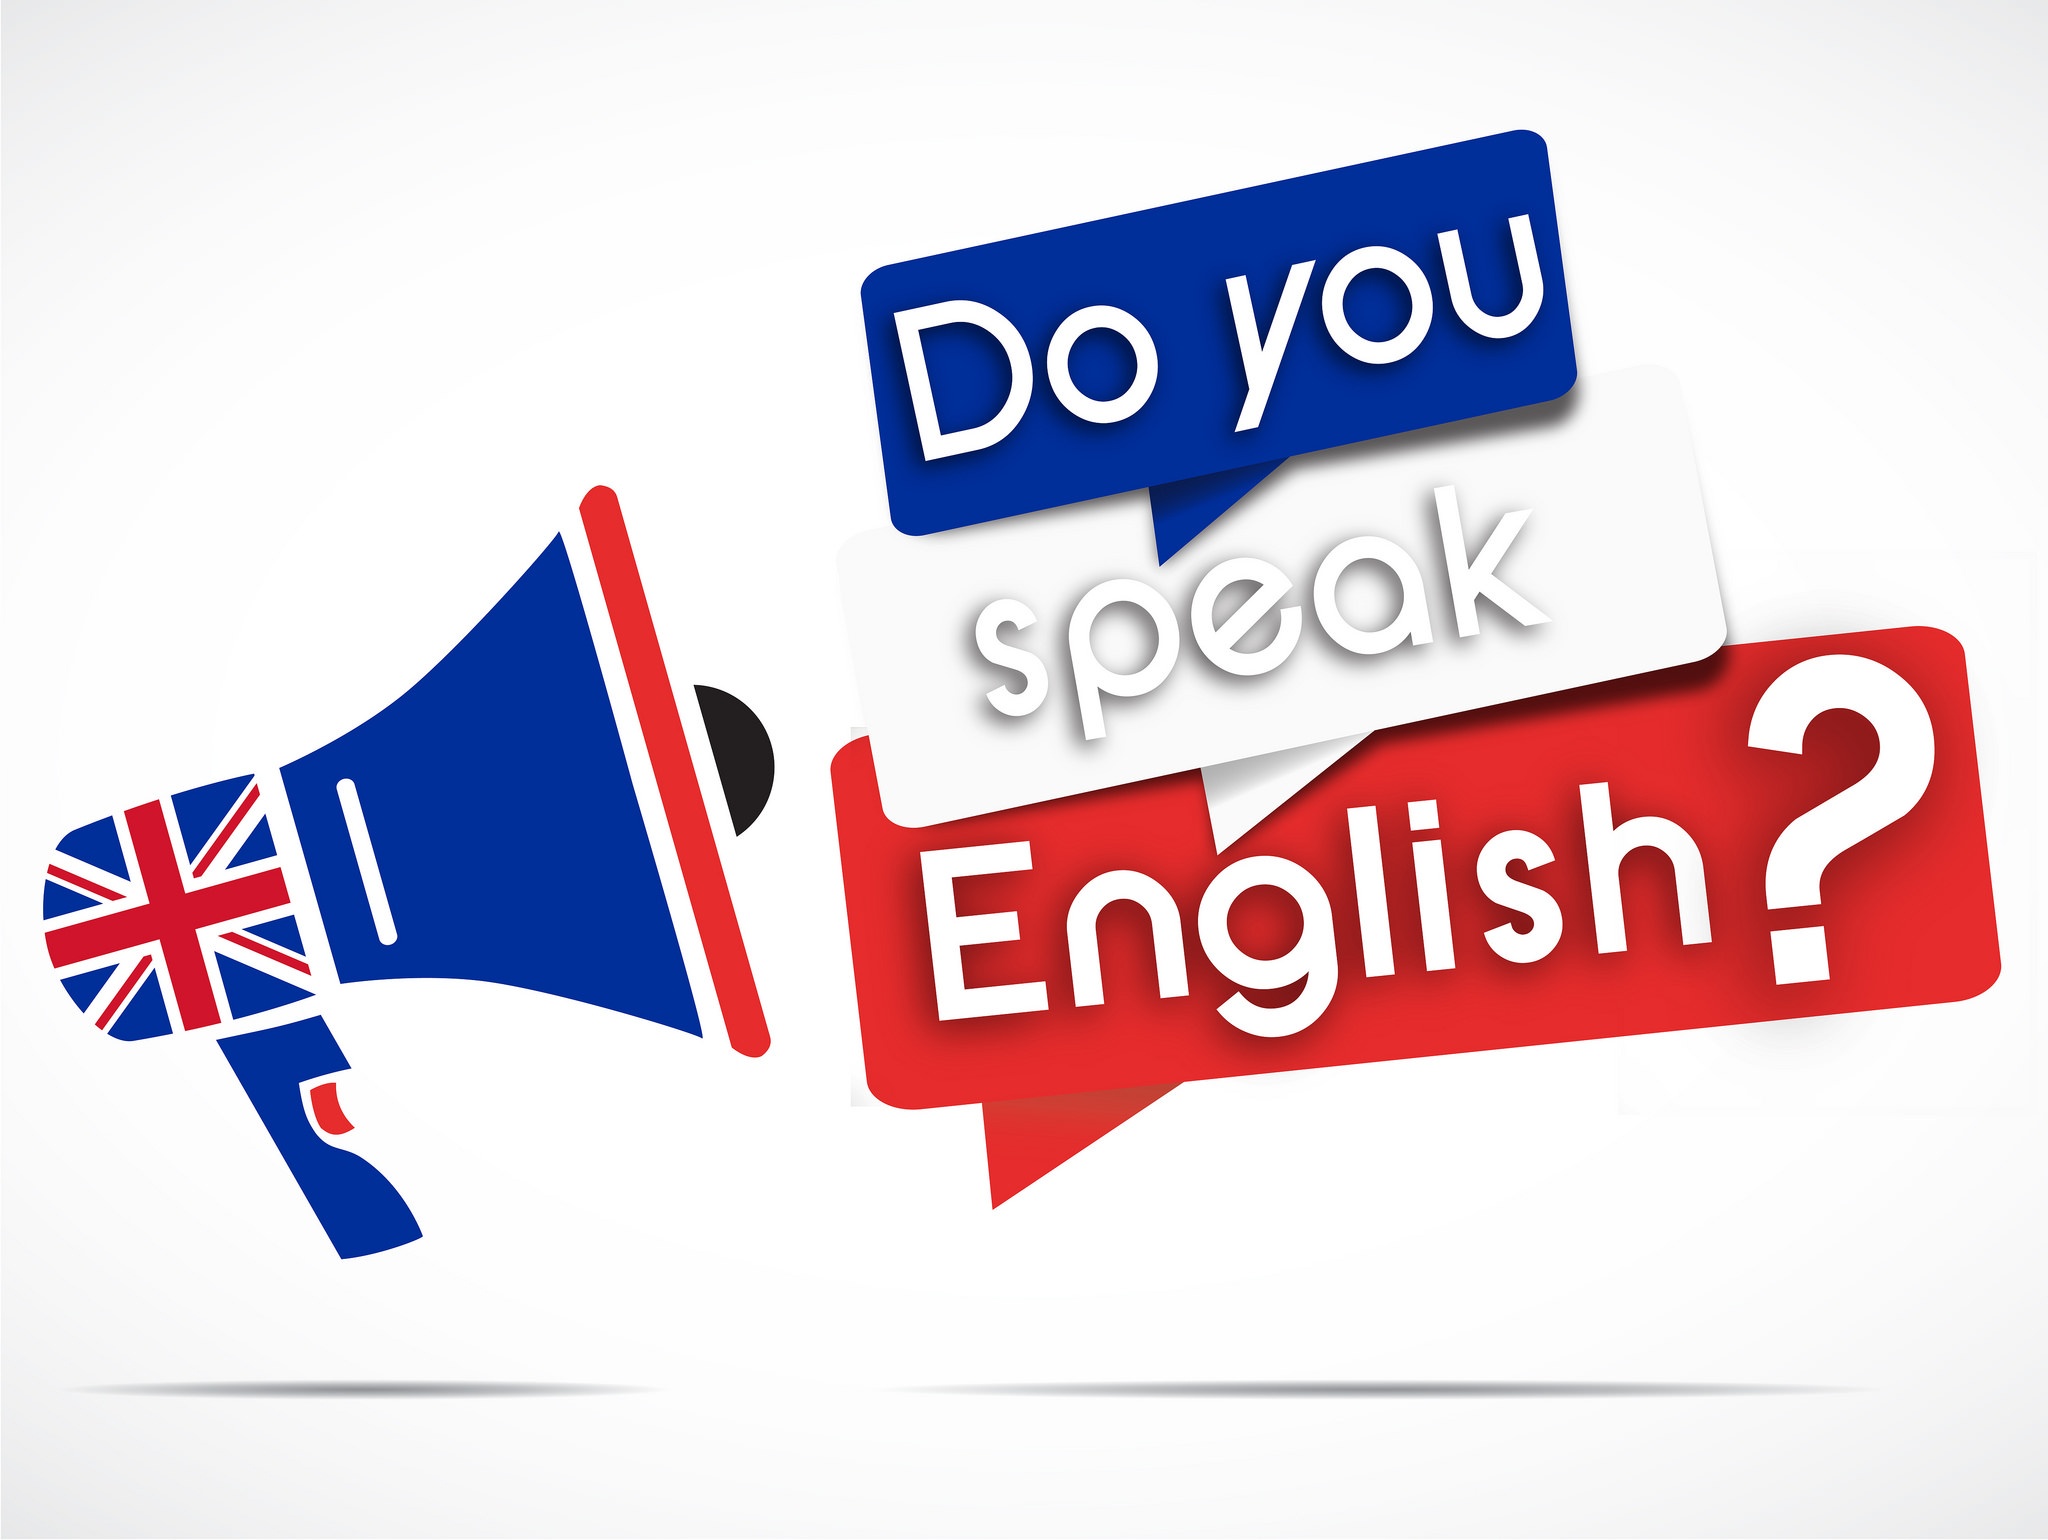 Can speak english please. Speak English картинка. Do you speak English. Speak English надпись. Английский язык do you speak.